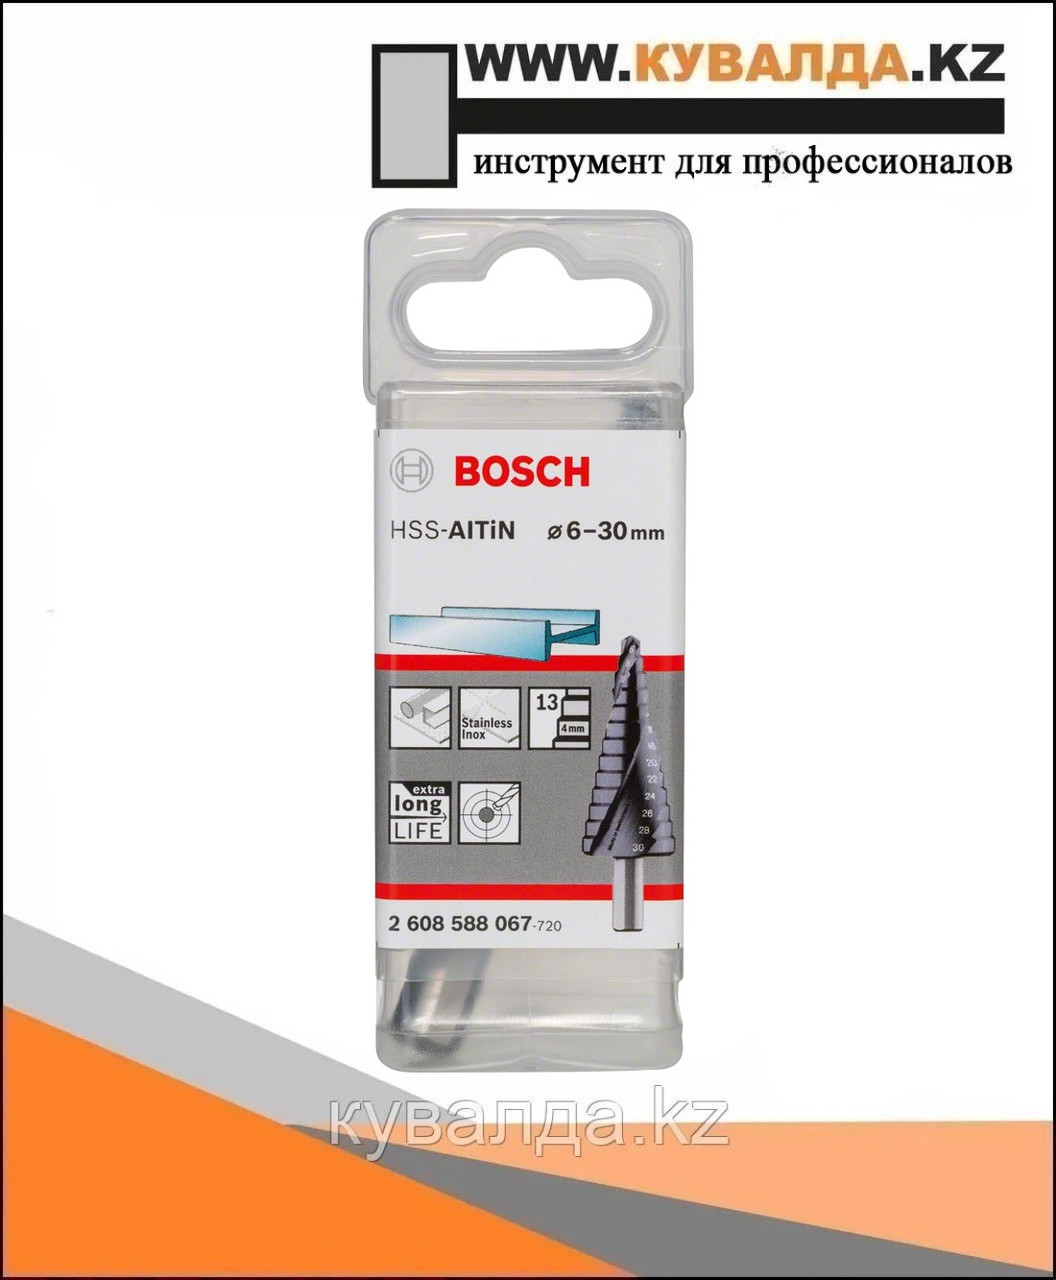 Bosch Ступ сверло HSS-AlTiN 13 ступ 6-30 мм